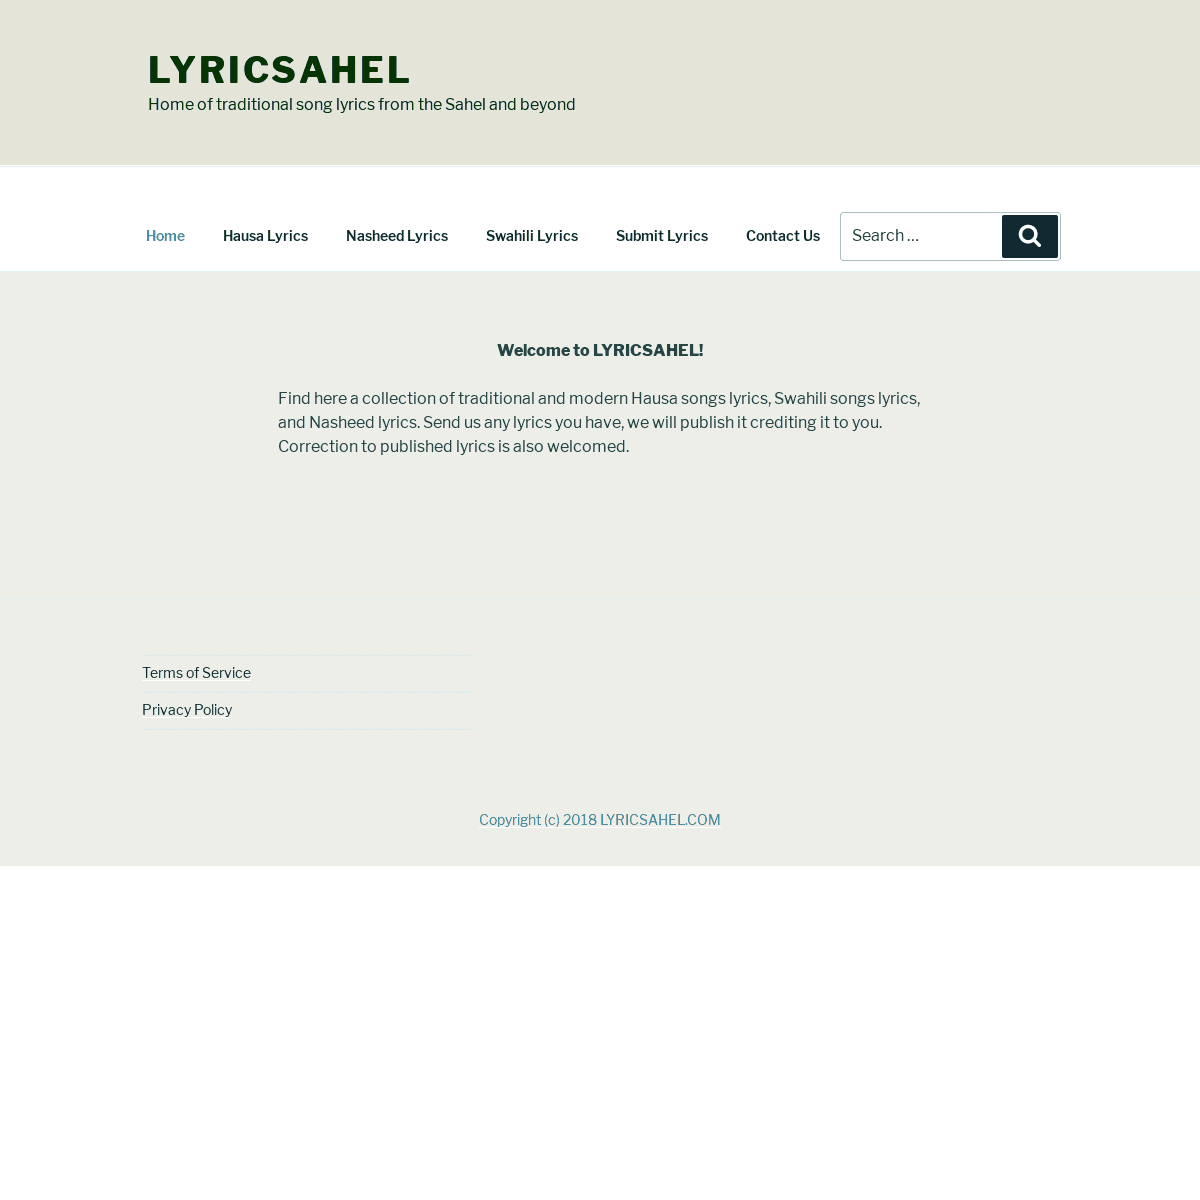 A complete backup of lyricsahel.com